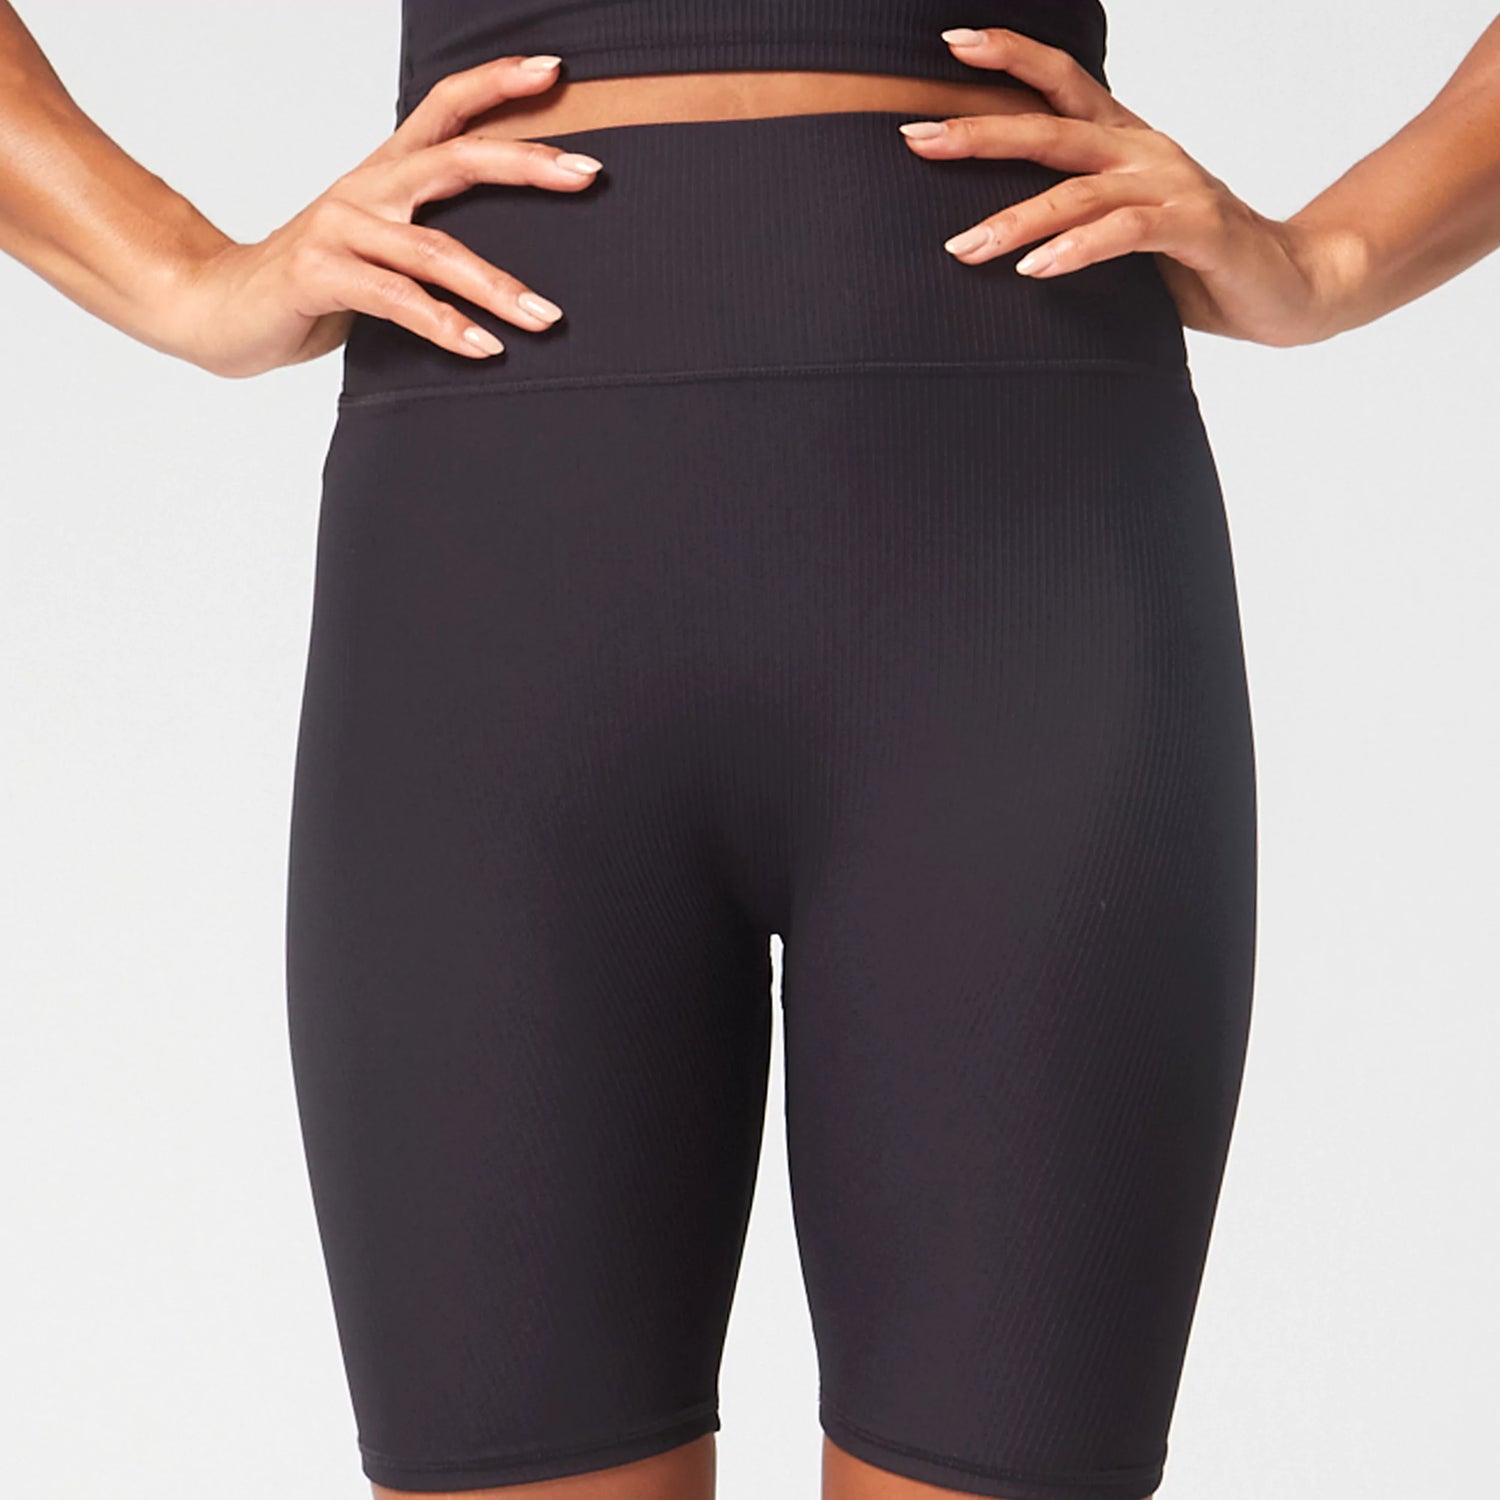 AE, Code Ribbed Biker Shorts - Black, Workout Shorts Women